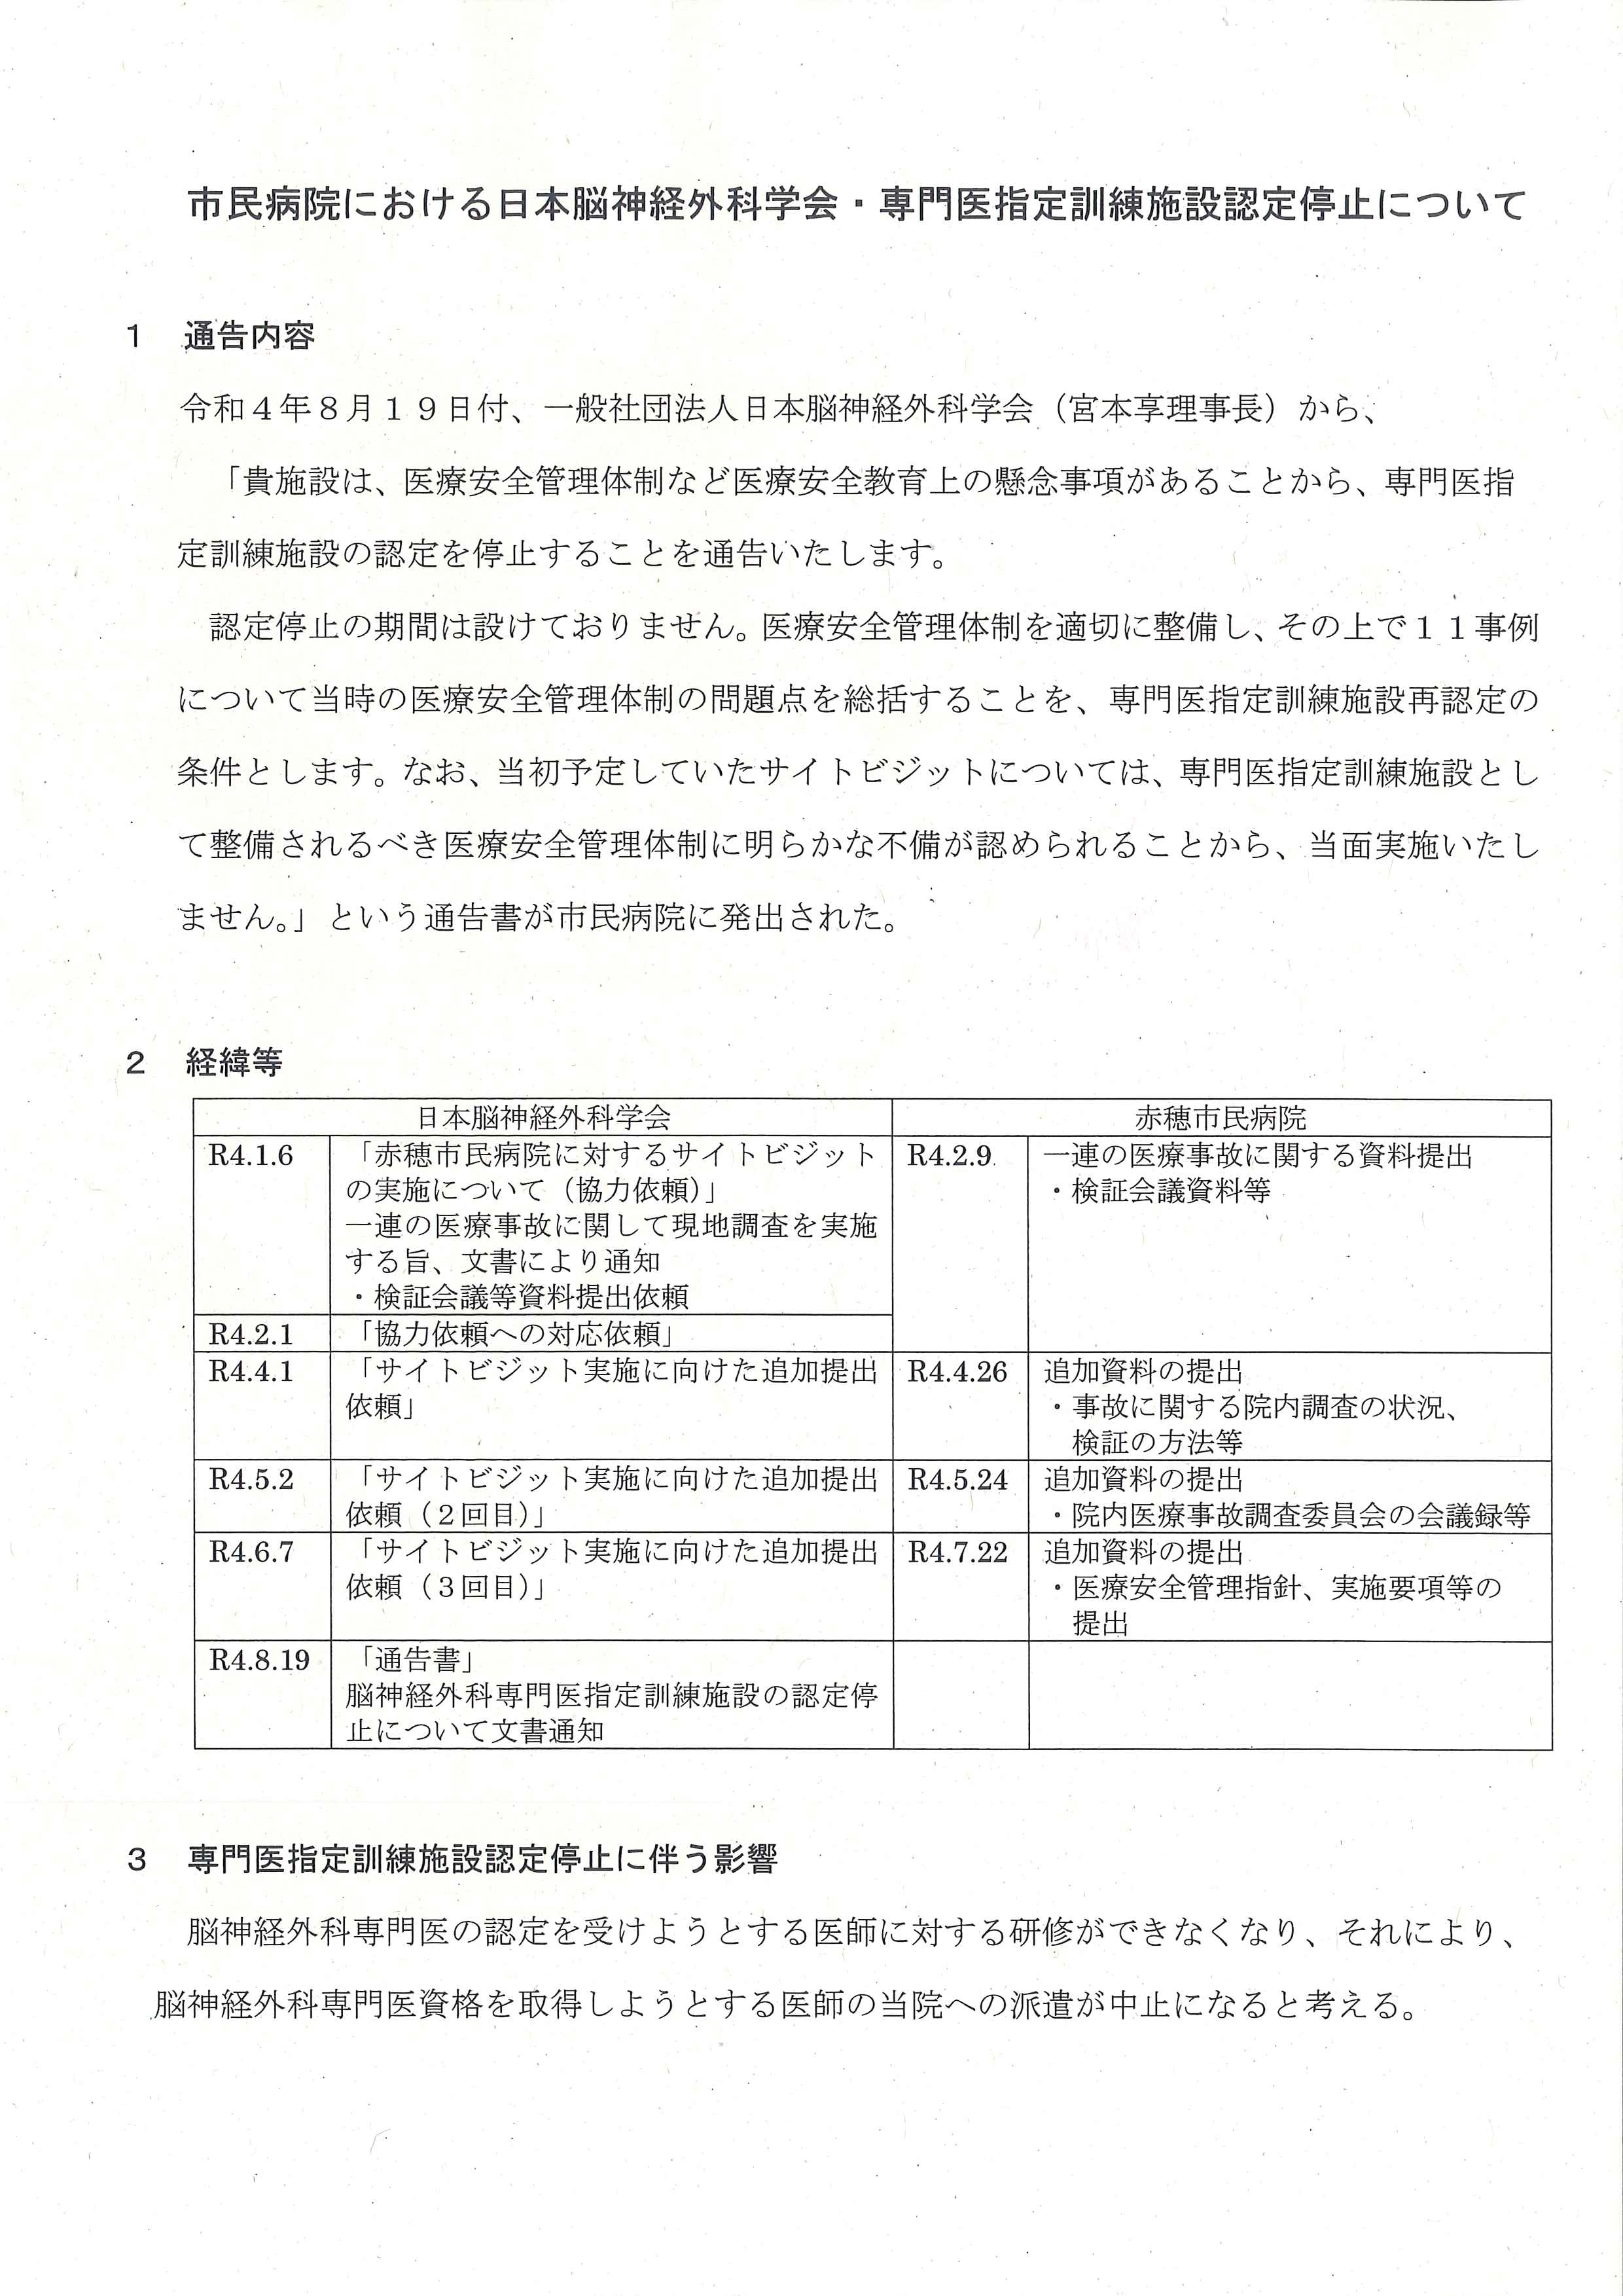 日本脳神経外科学会の専門医訓練施設認定停止に関して赤穂市民病院が市議会民生生活委員会協議会（９月７日）で配布した説明資料